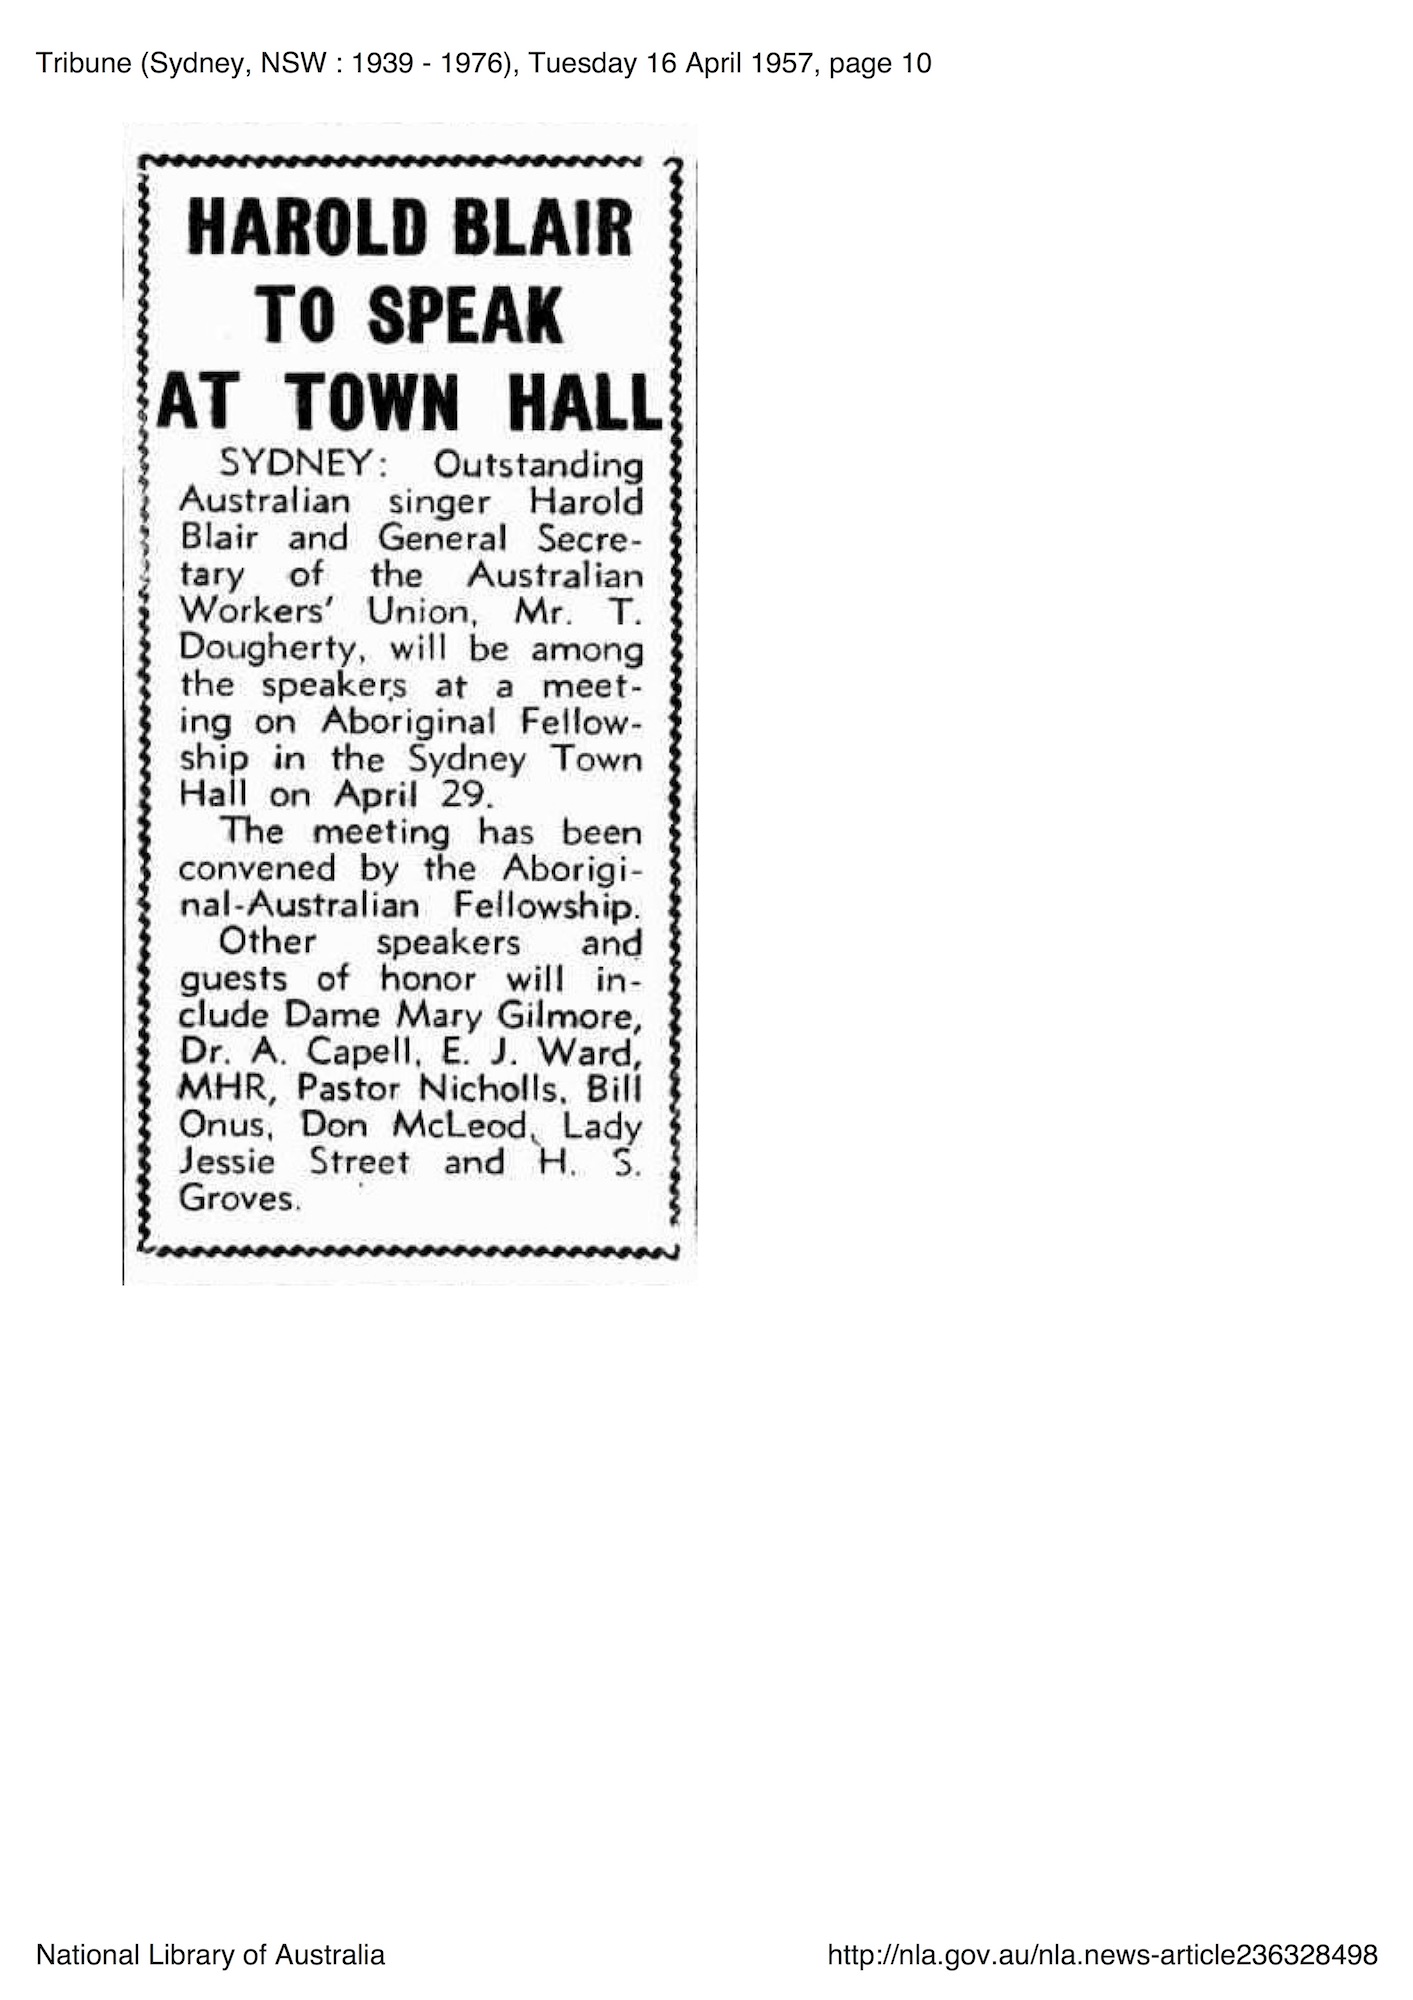 Tribune, 16 April 1957, p. 10, ‘Harold Blair to Speak at Town Hall’